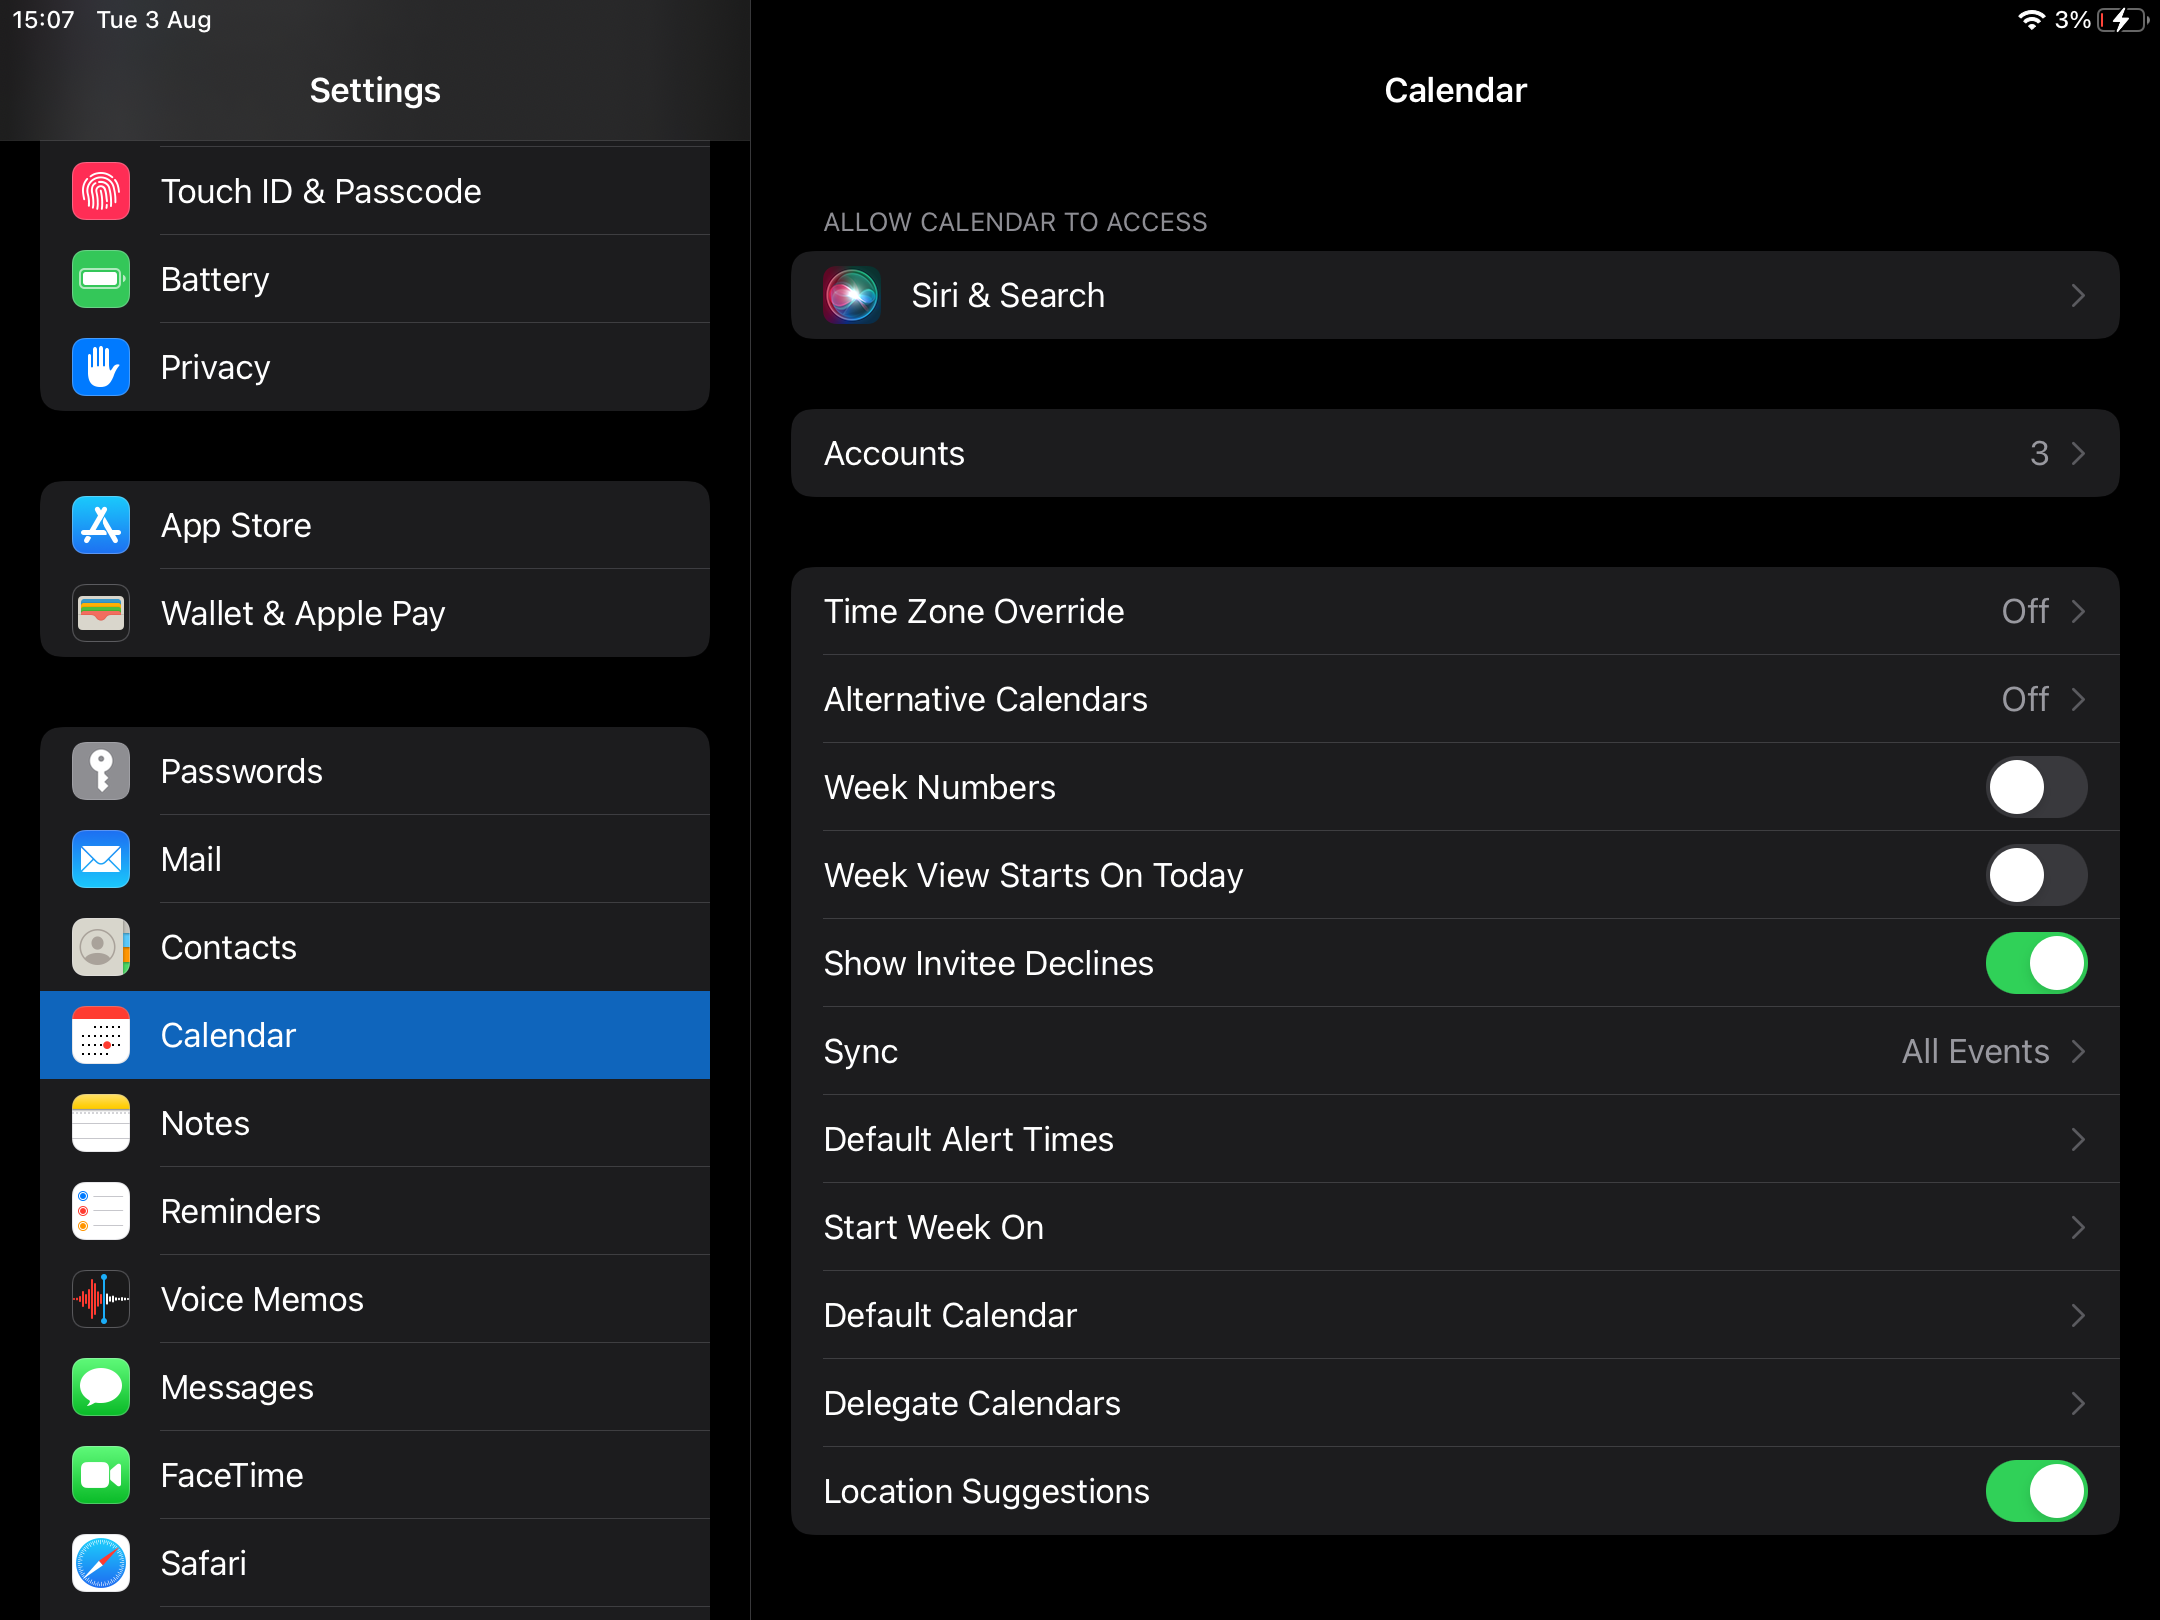 Calendar settings on iPhone or iPad